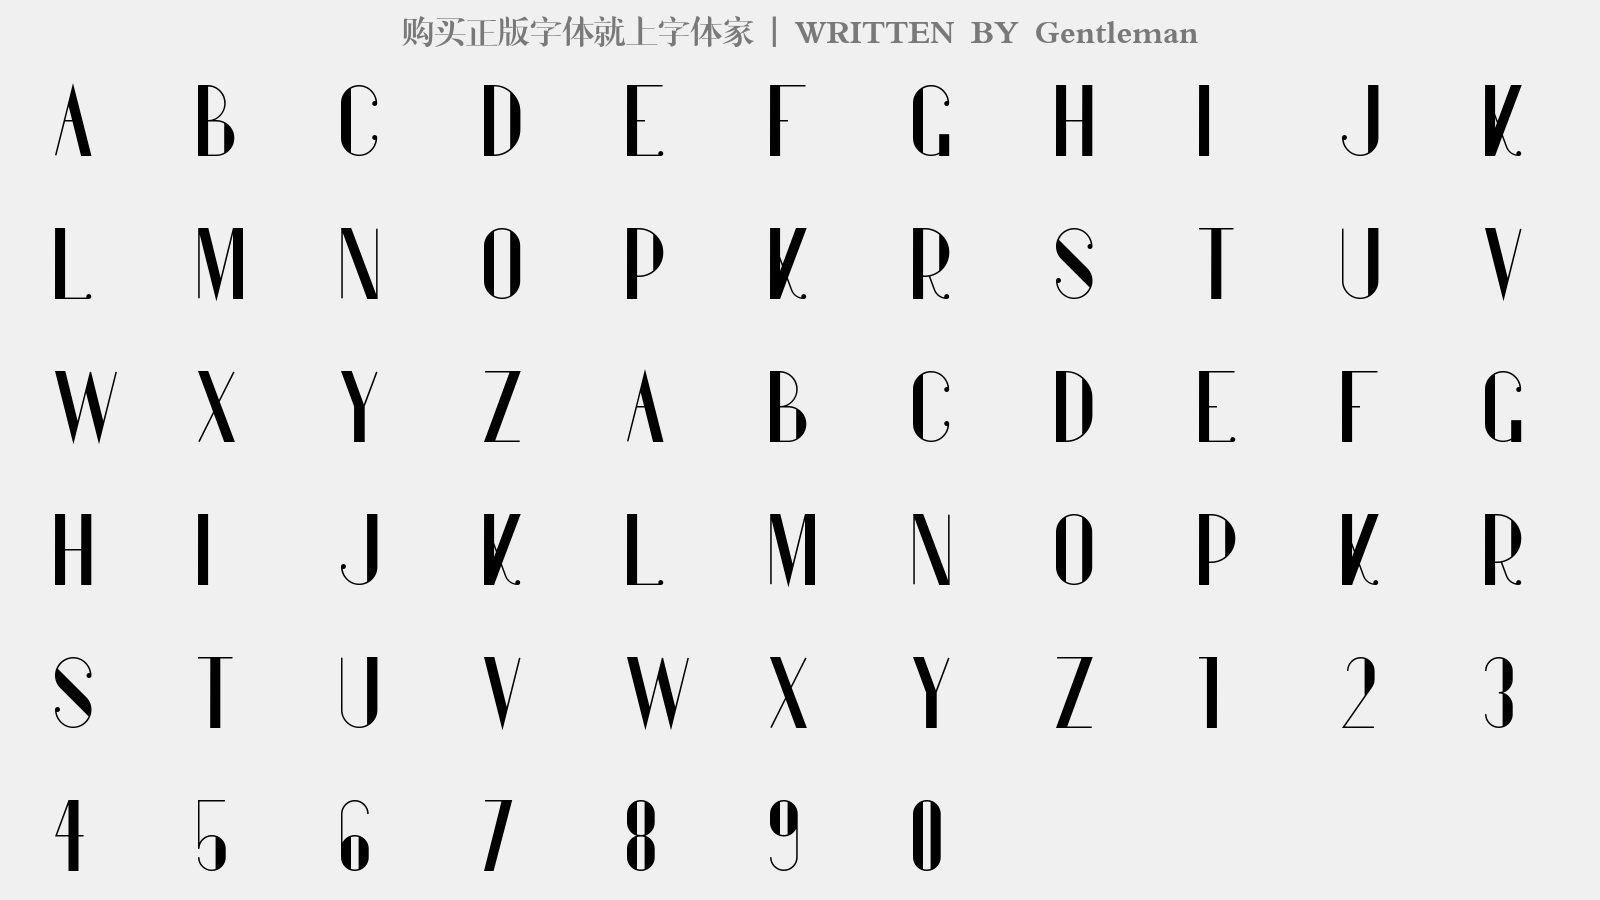 Gentleman - 大写字母/小写字母/数字